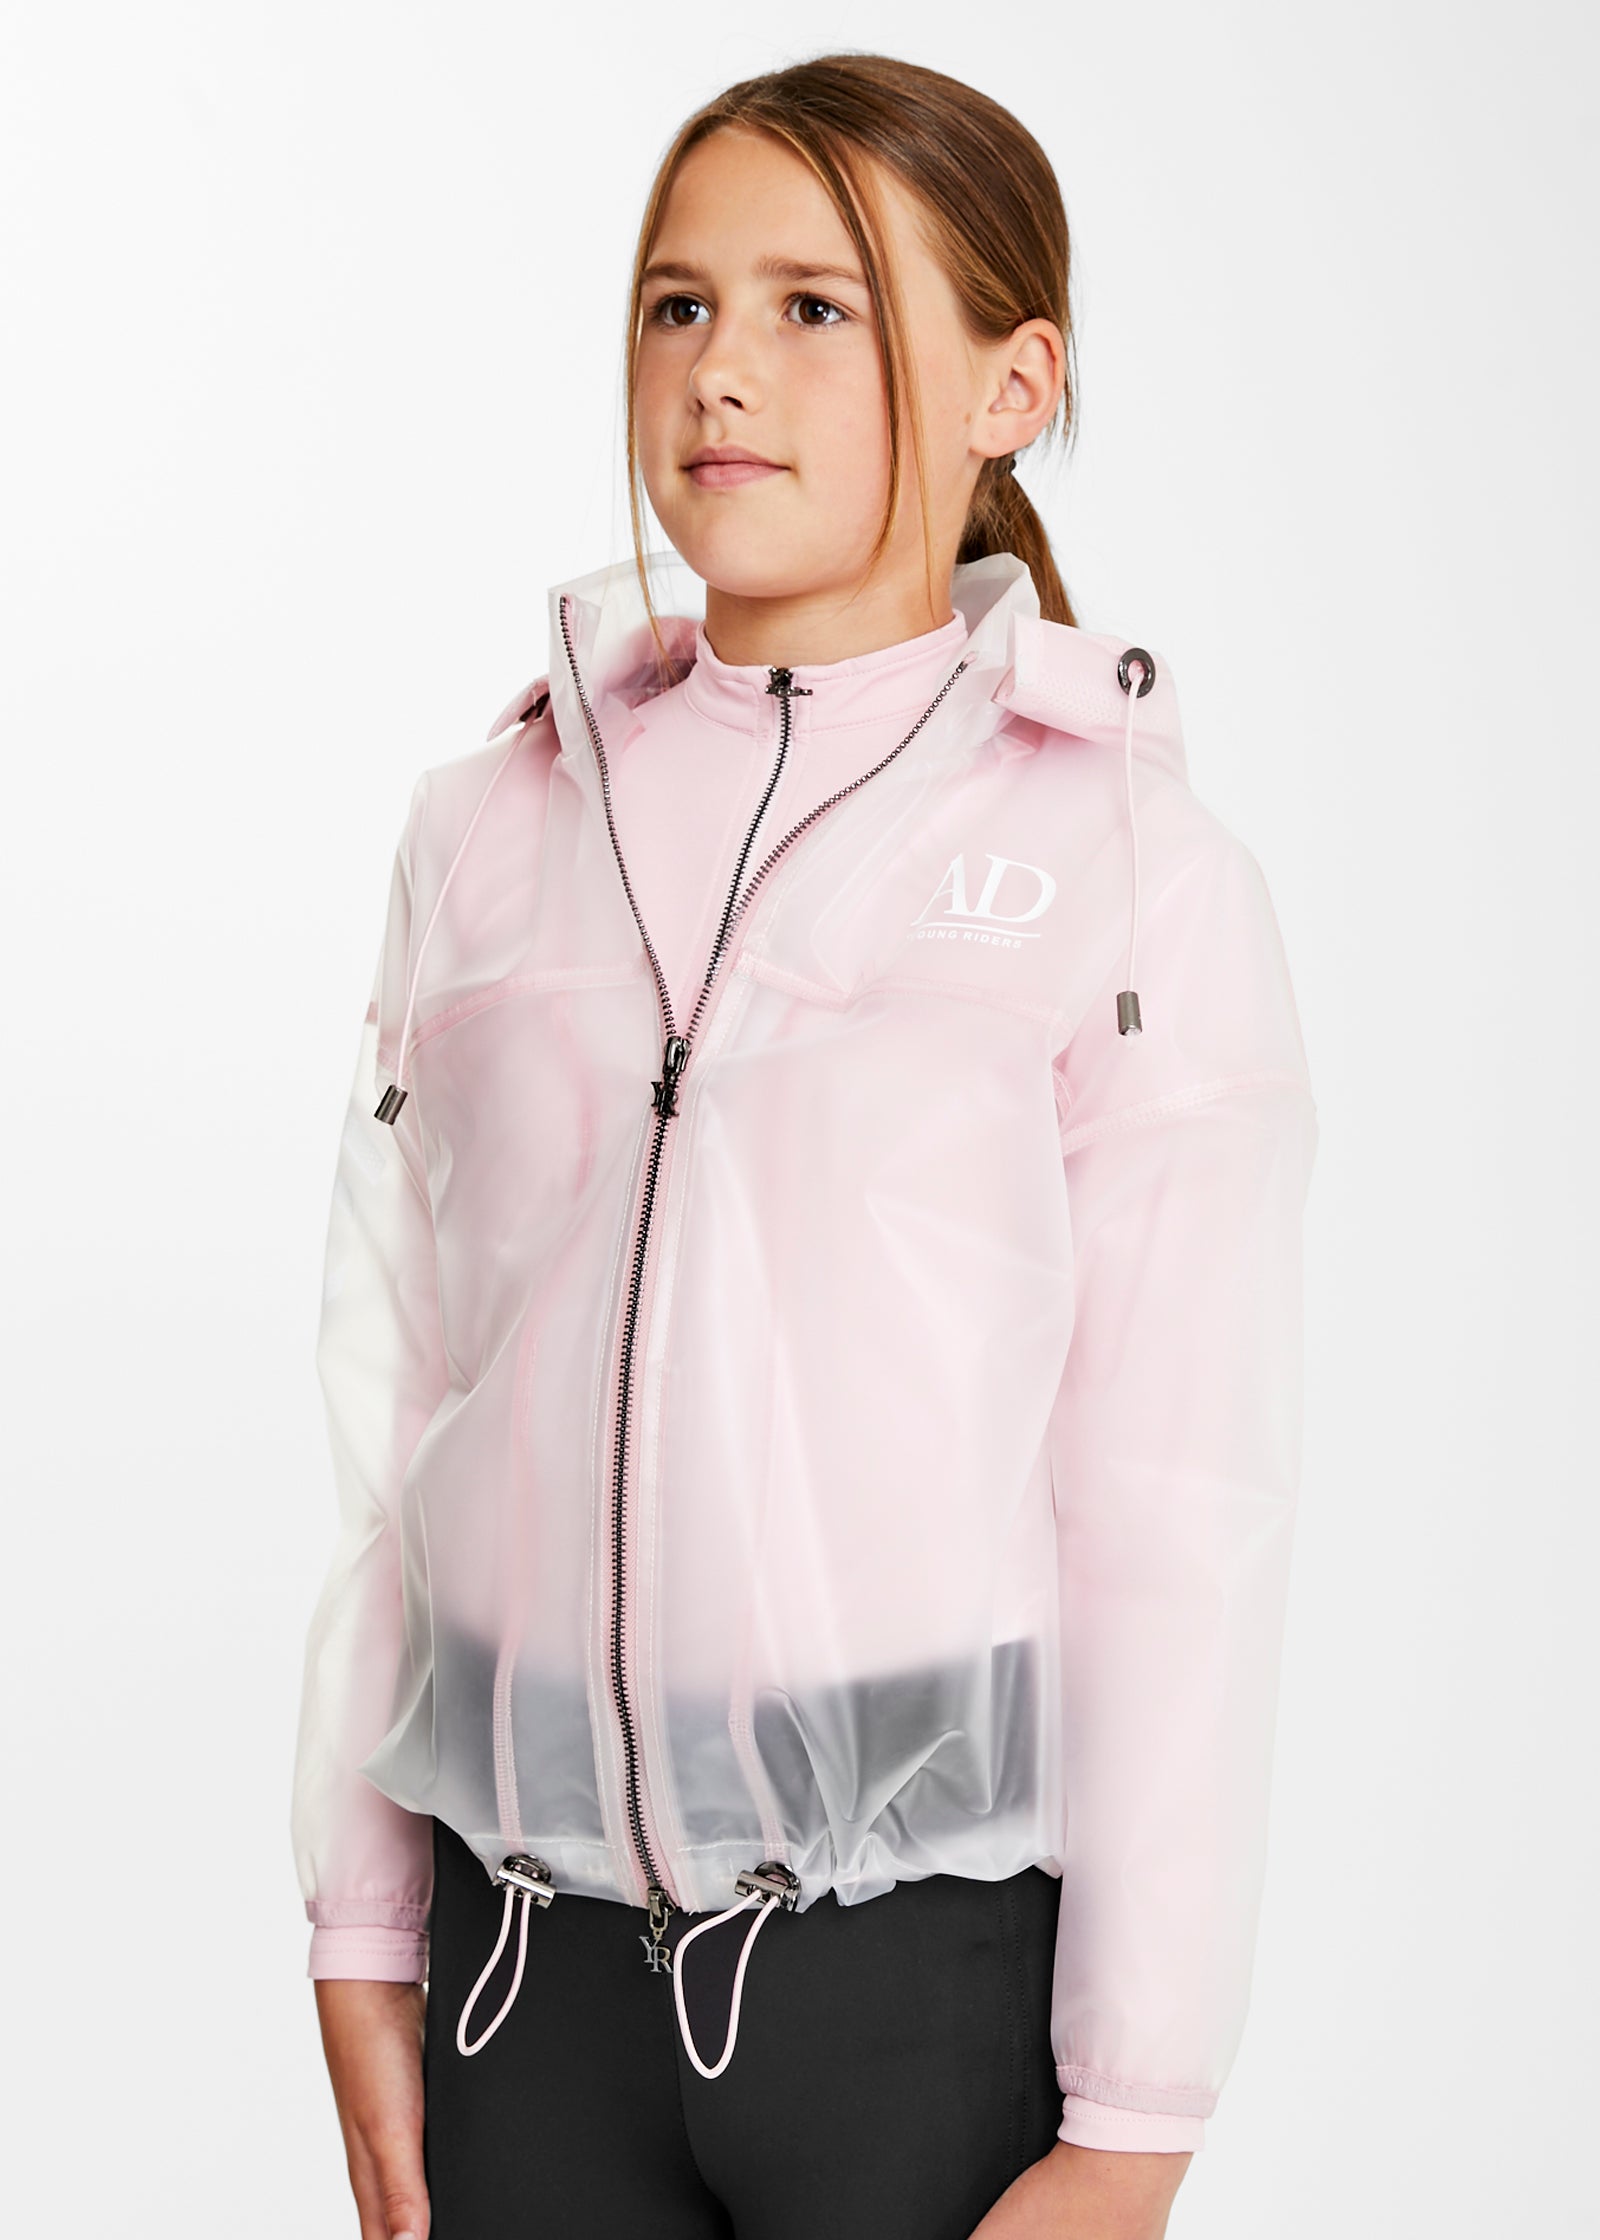 Kids Rain Jacket with Pink Trim detail – Aztec Diamond